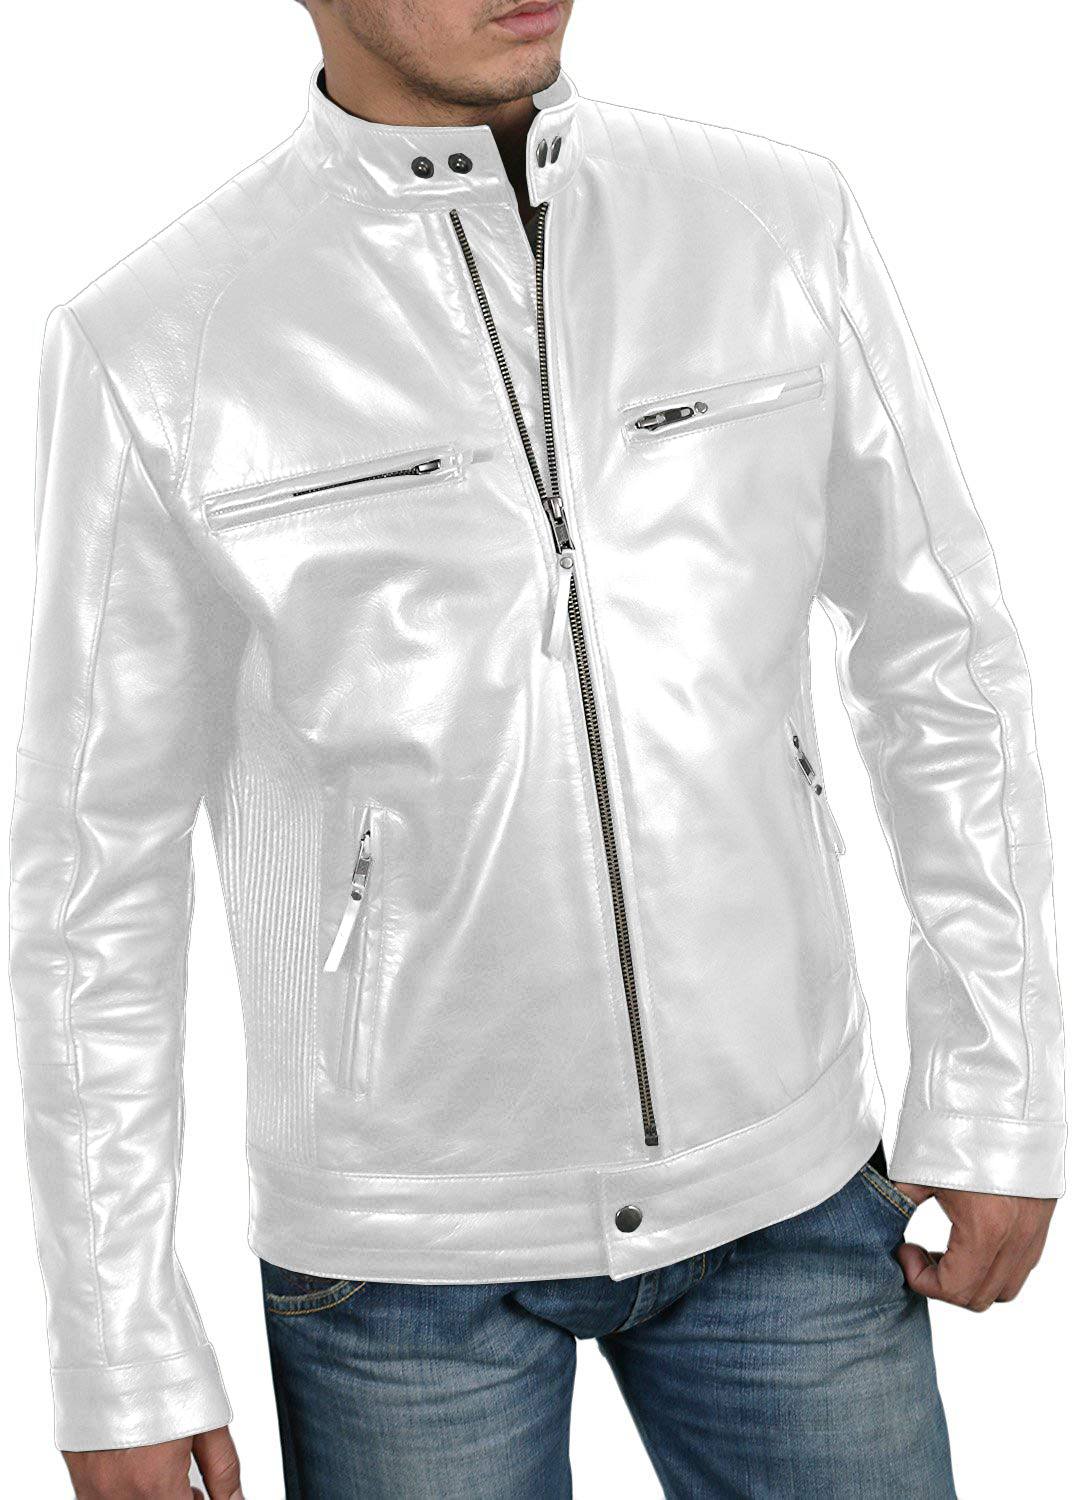 Leather Jackets Hub Mens Genuine Lambskin Leather Jacket (Black, Fencing Jacket) - 1501309